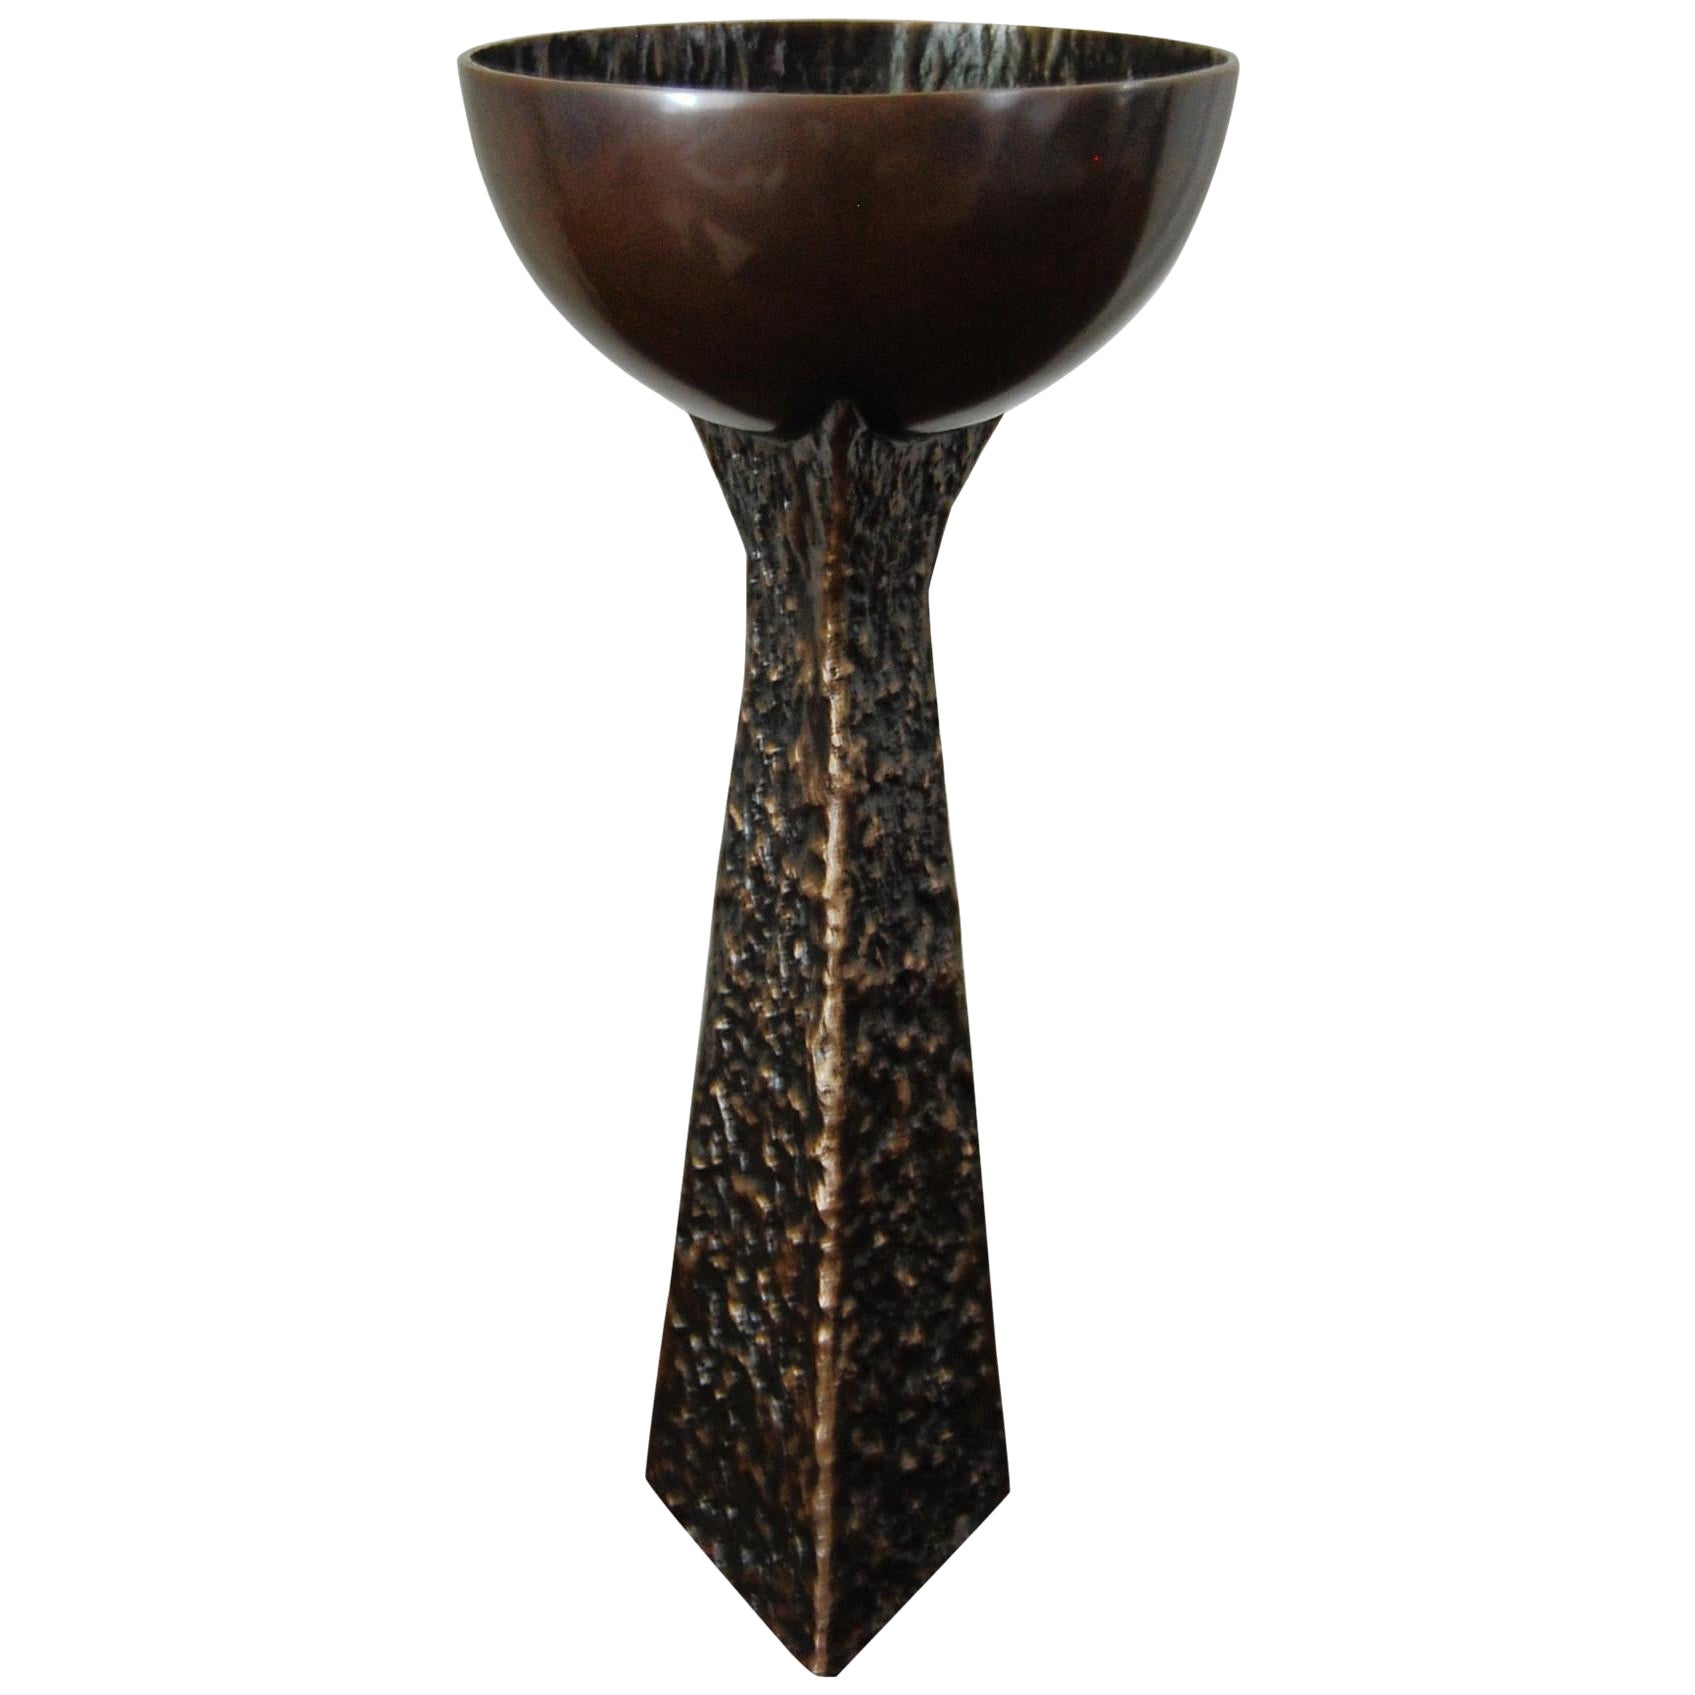 Cup Vase in Dark Bronze by Fakasaka Design For Sale